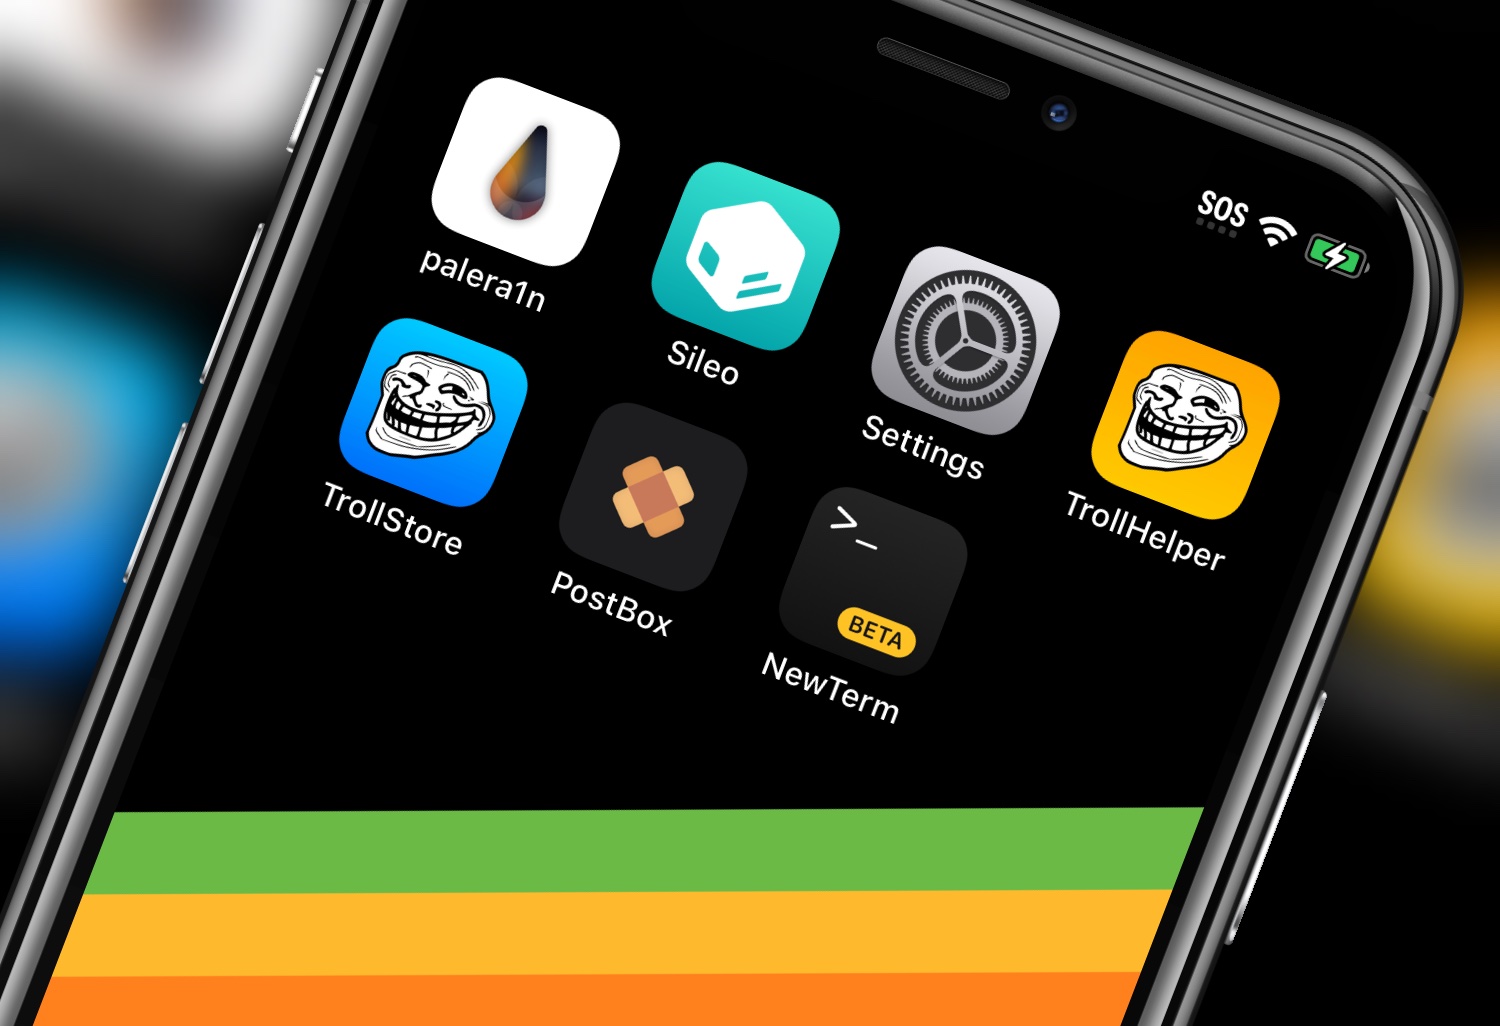 Installing TrollStore on iPhone with TrollHelperOTA